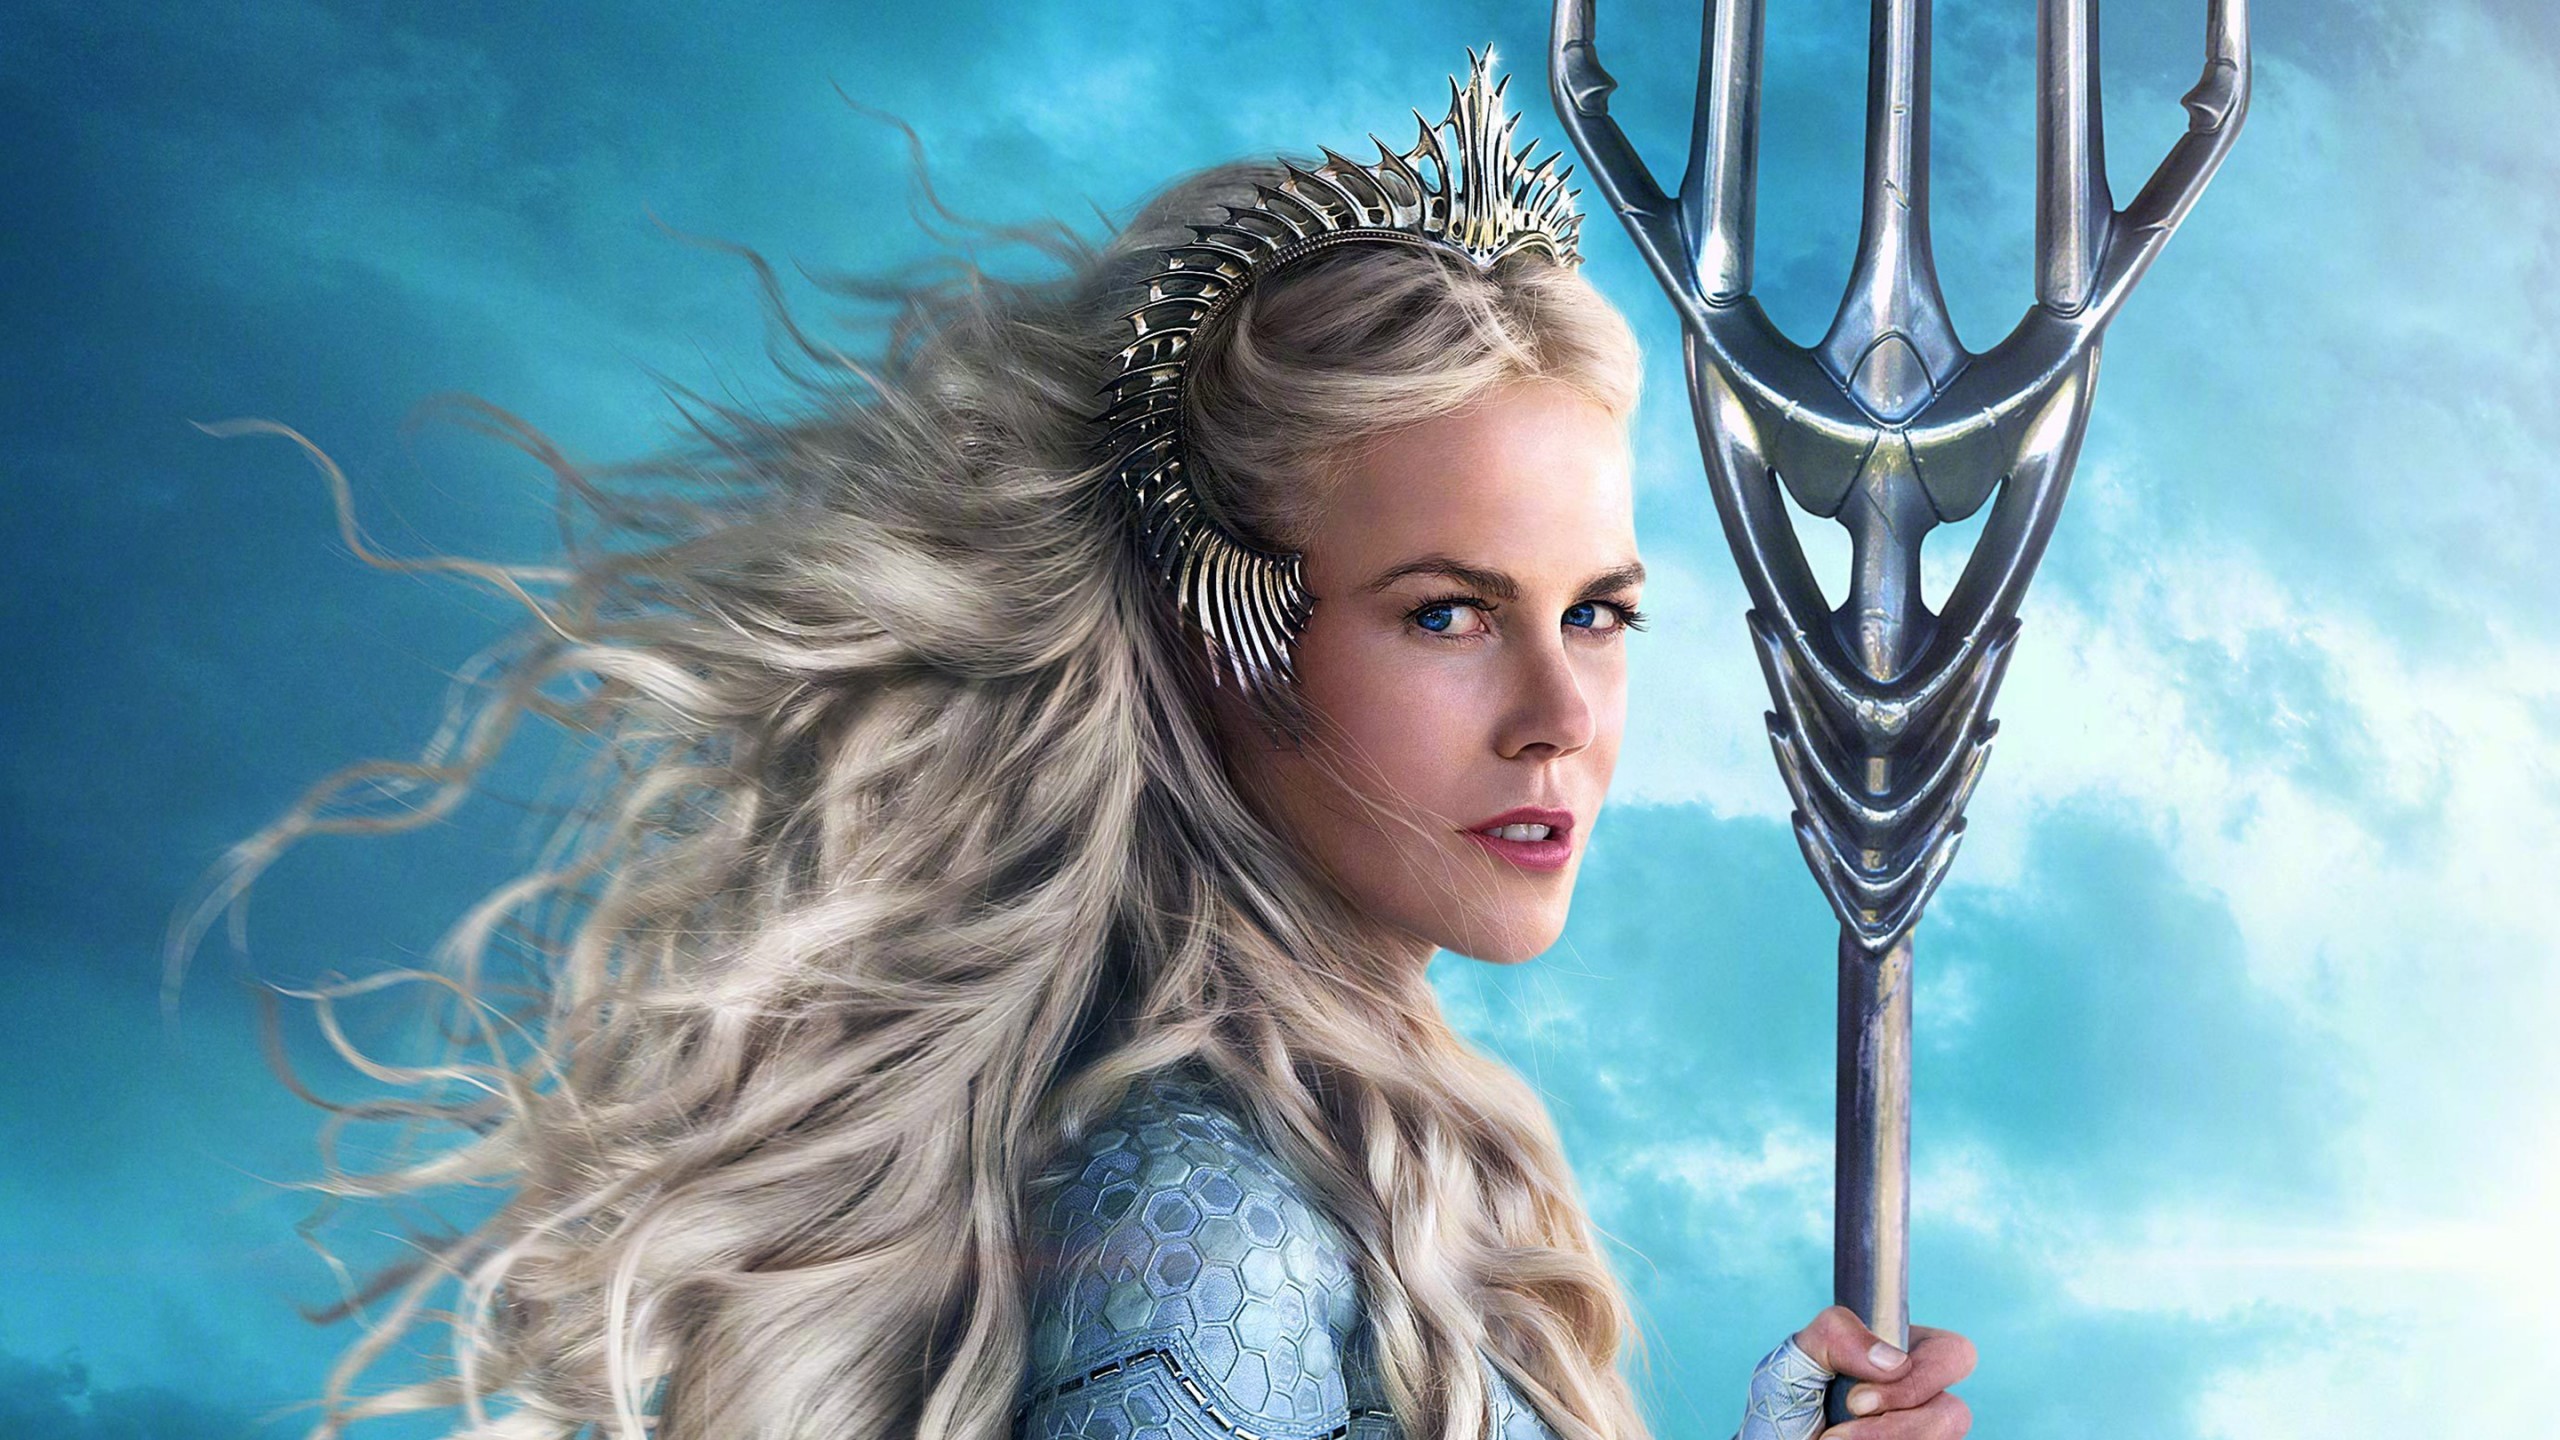 2560x1440 Nicole Kidman as Queen Atlanna in Aquaman Wallpapers. Nicole Kidman as  Queen Atlanna in Aquaman Wallpapers. Â«Â«